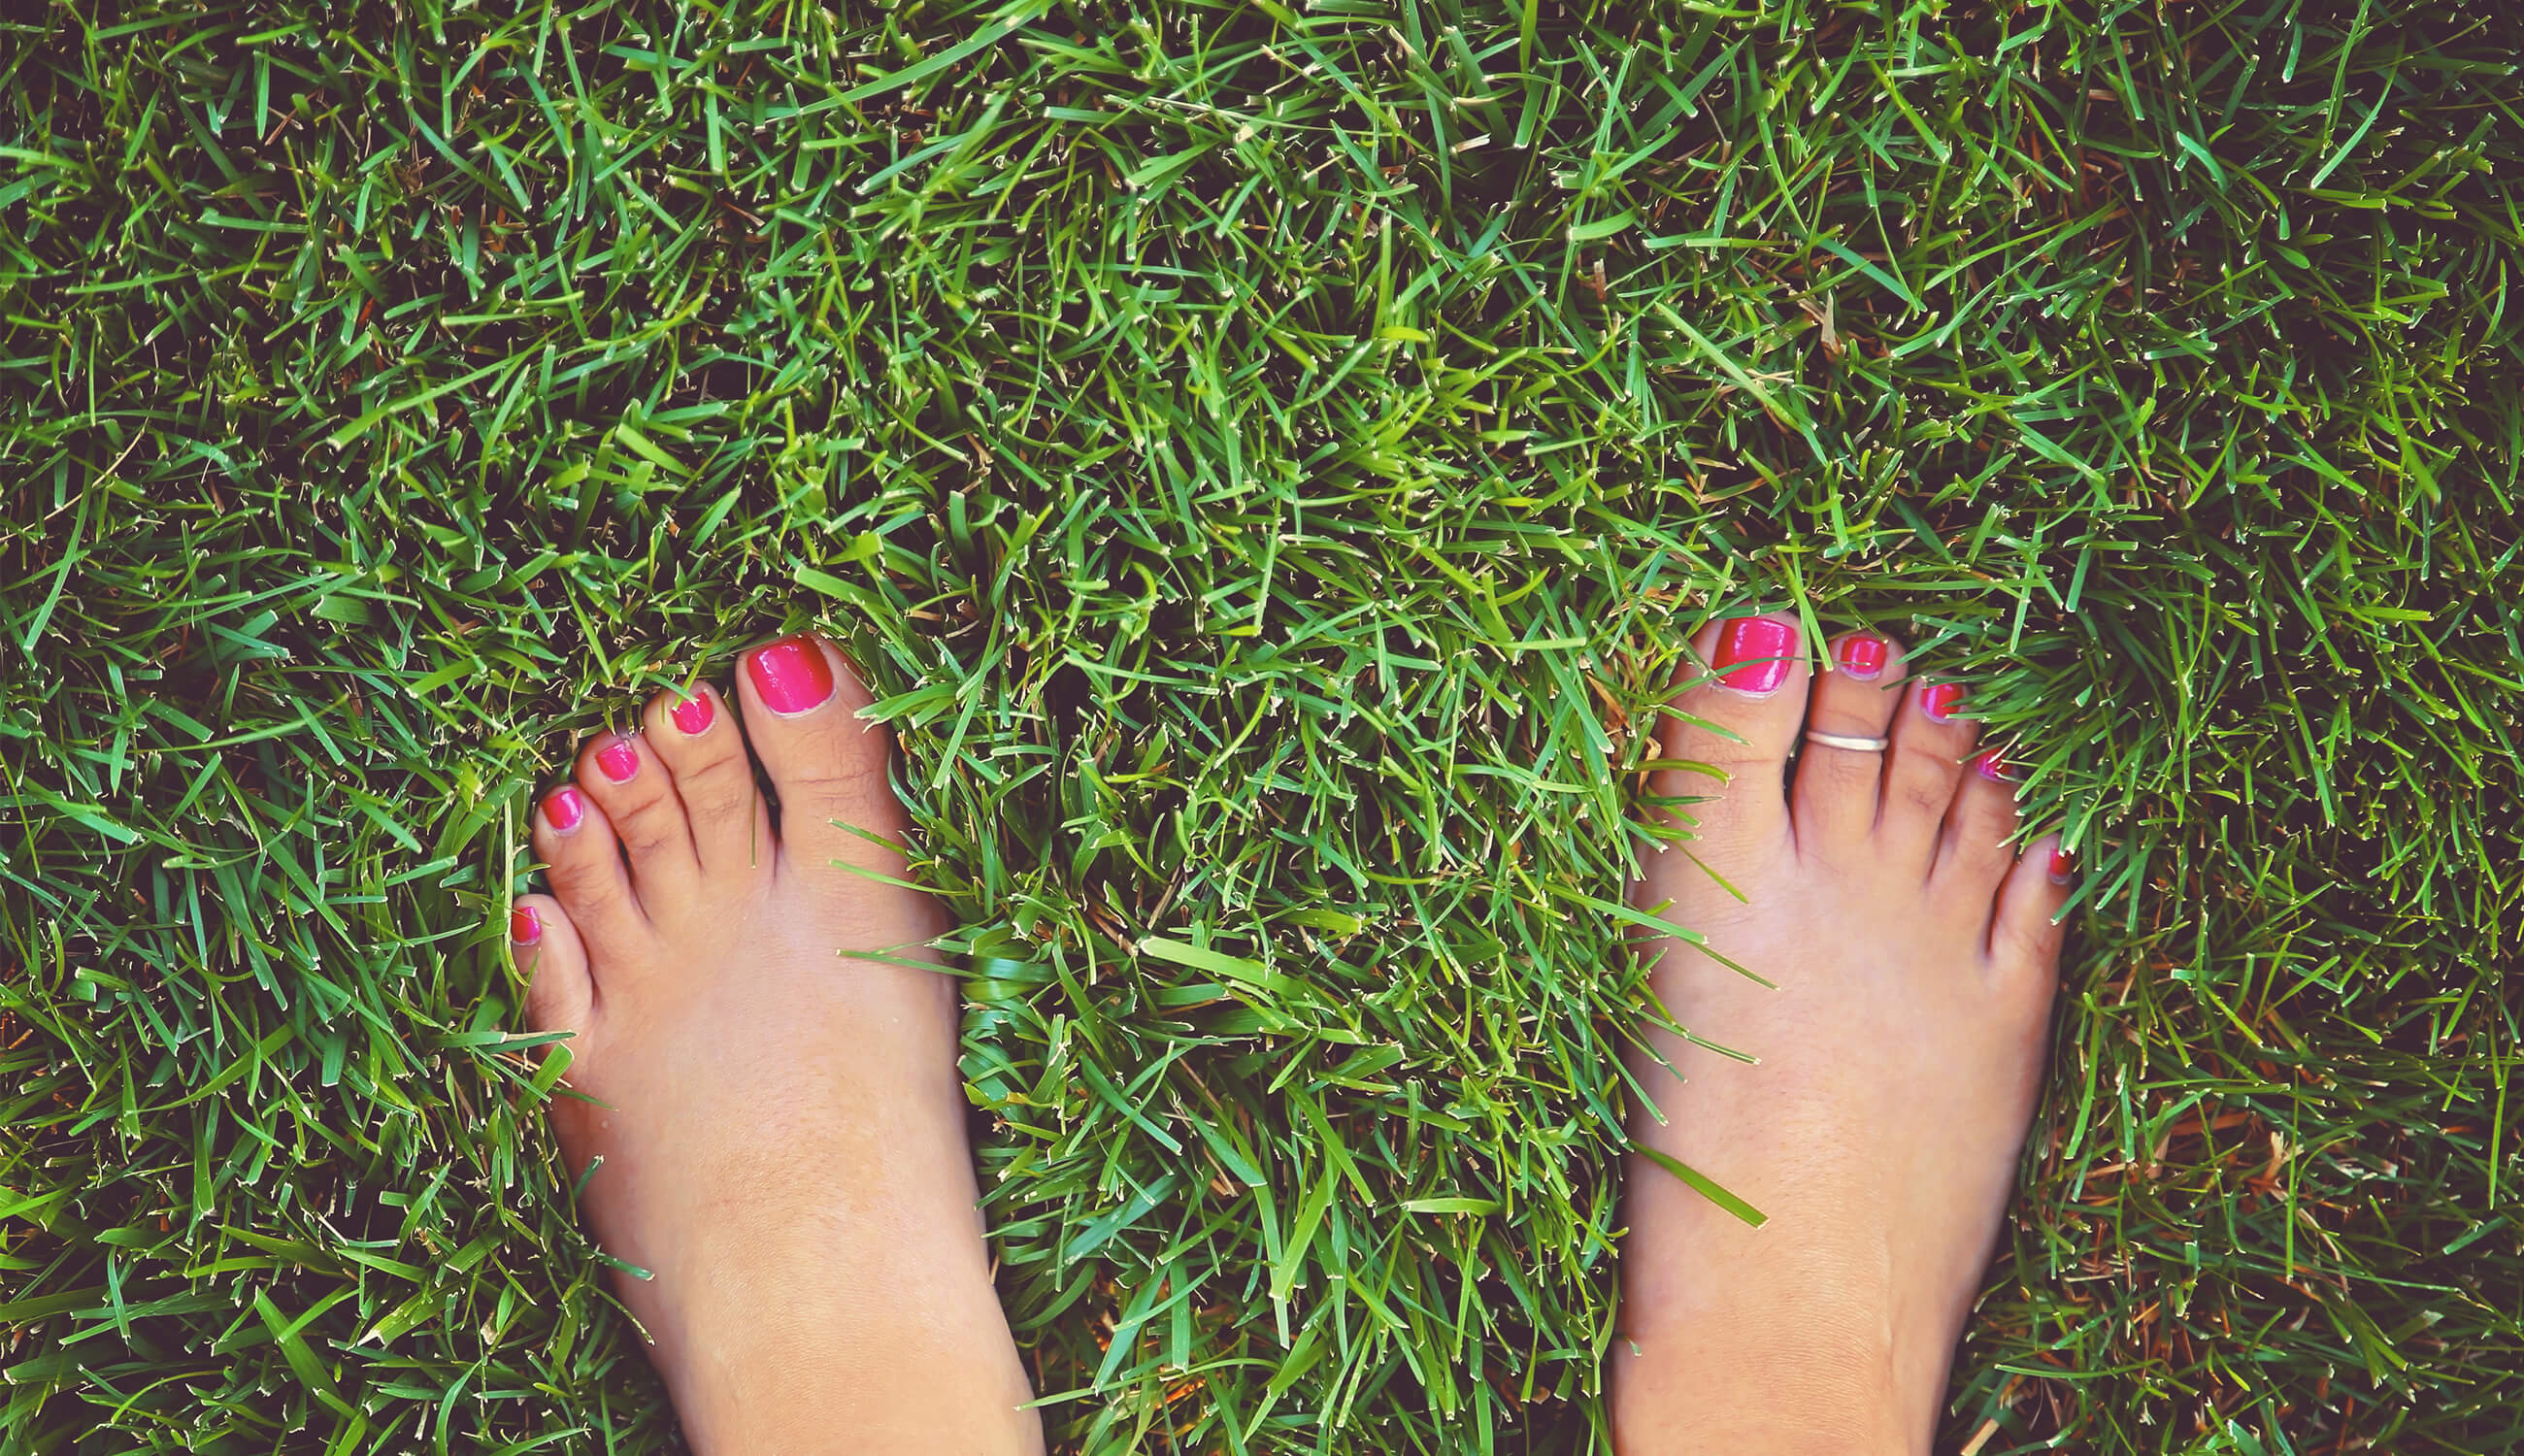 Bare feet standing in grass.jpg